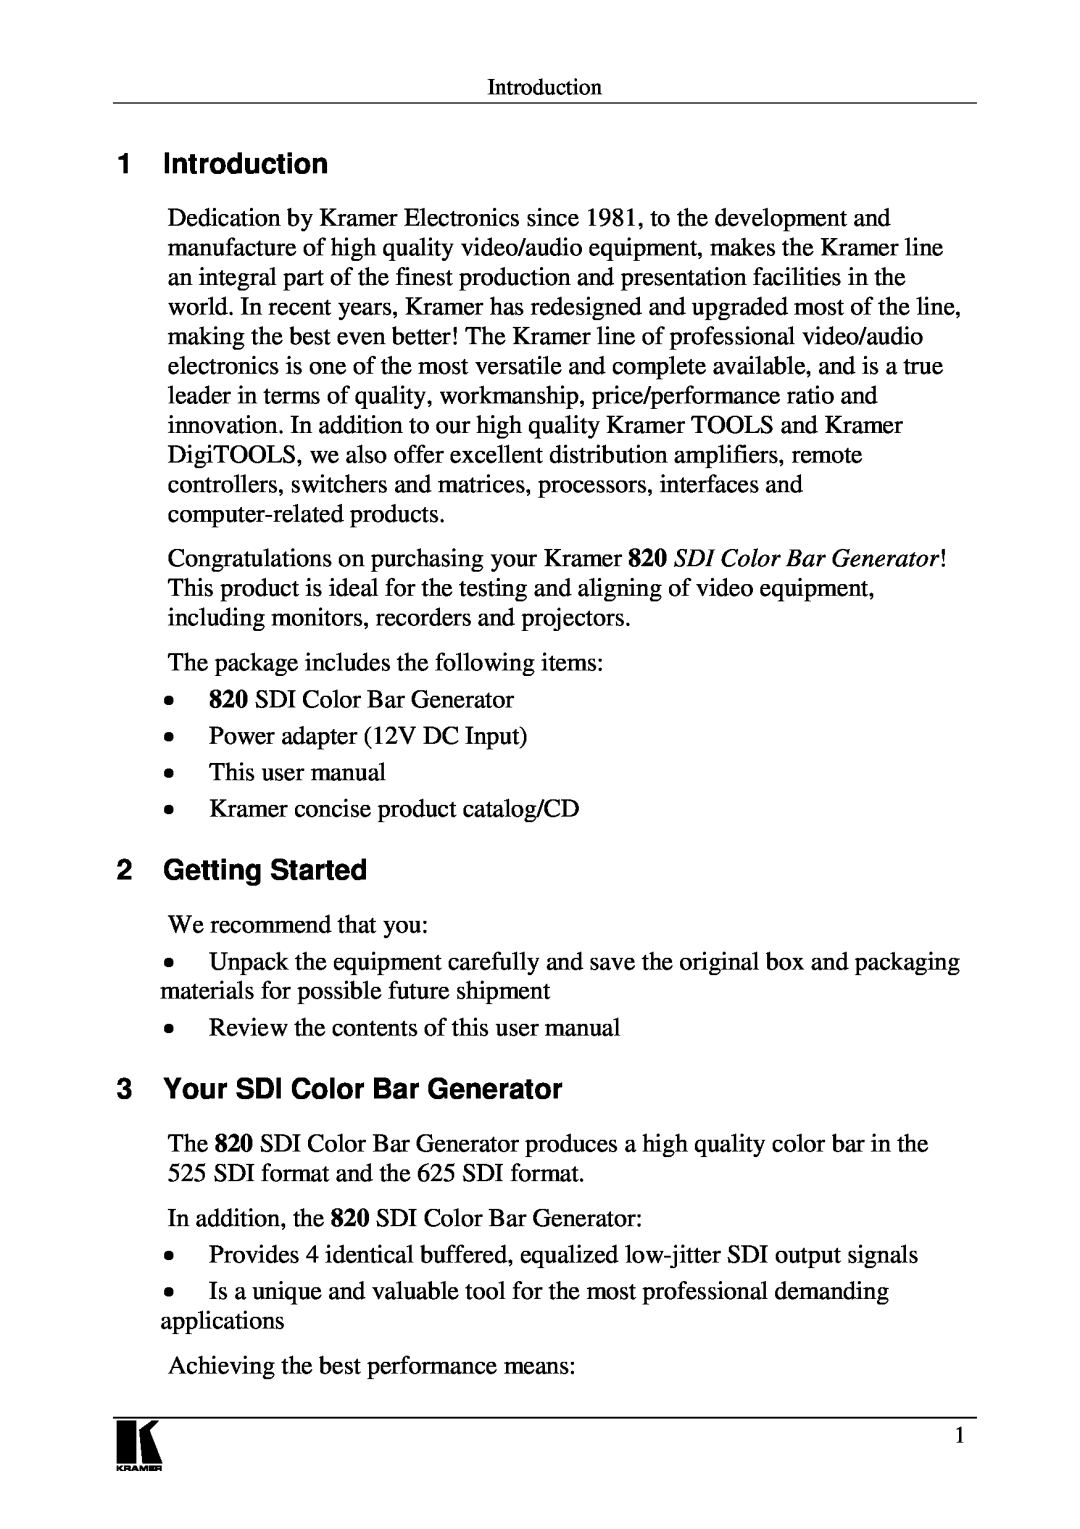 Kramer Electronics 820 user manual Introduction, Getting Started, Your SDI Color Bar Generator 